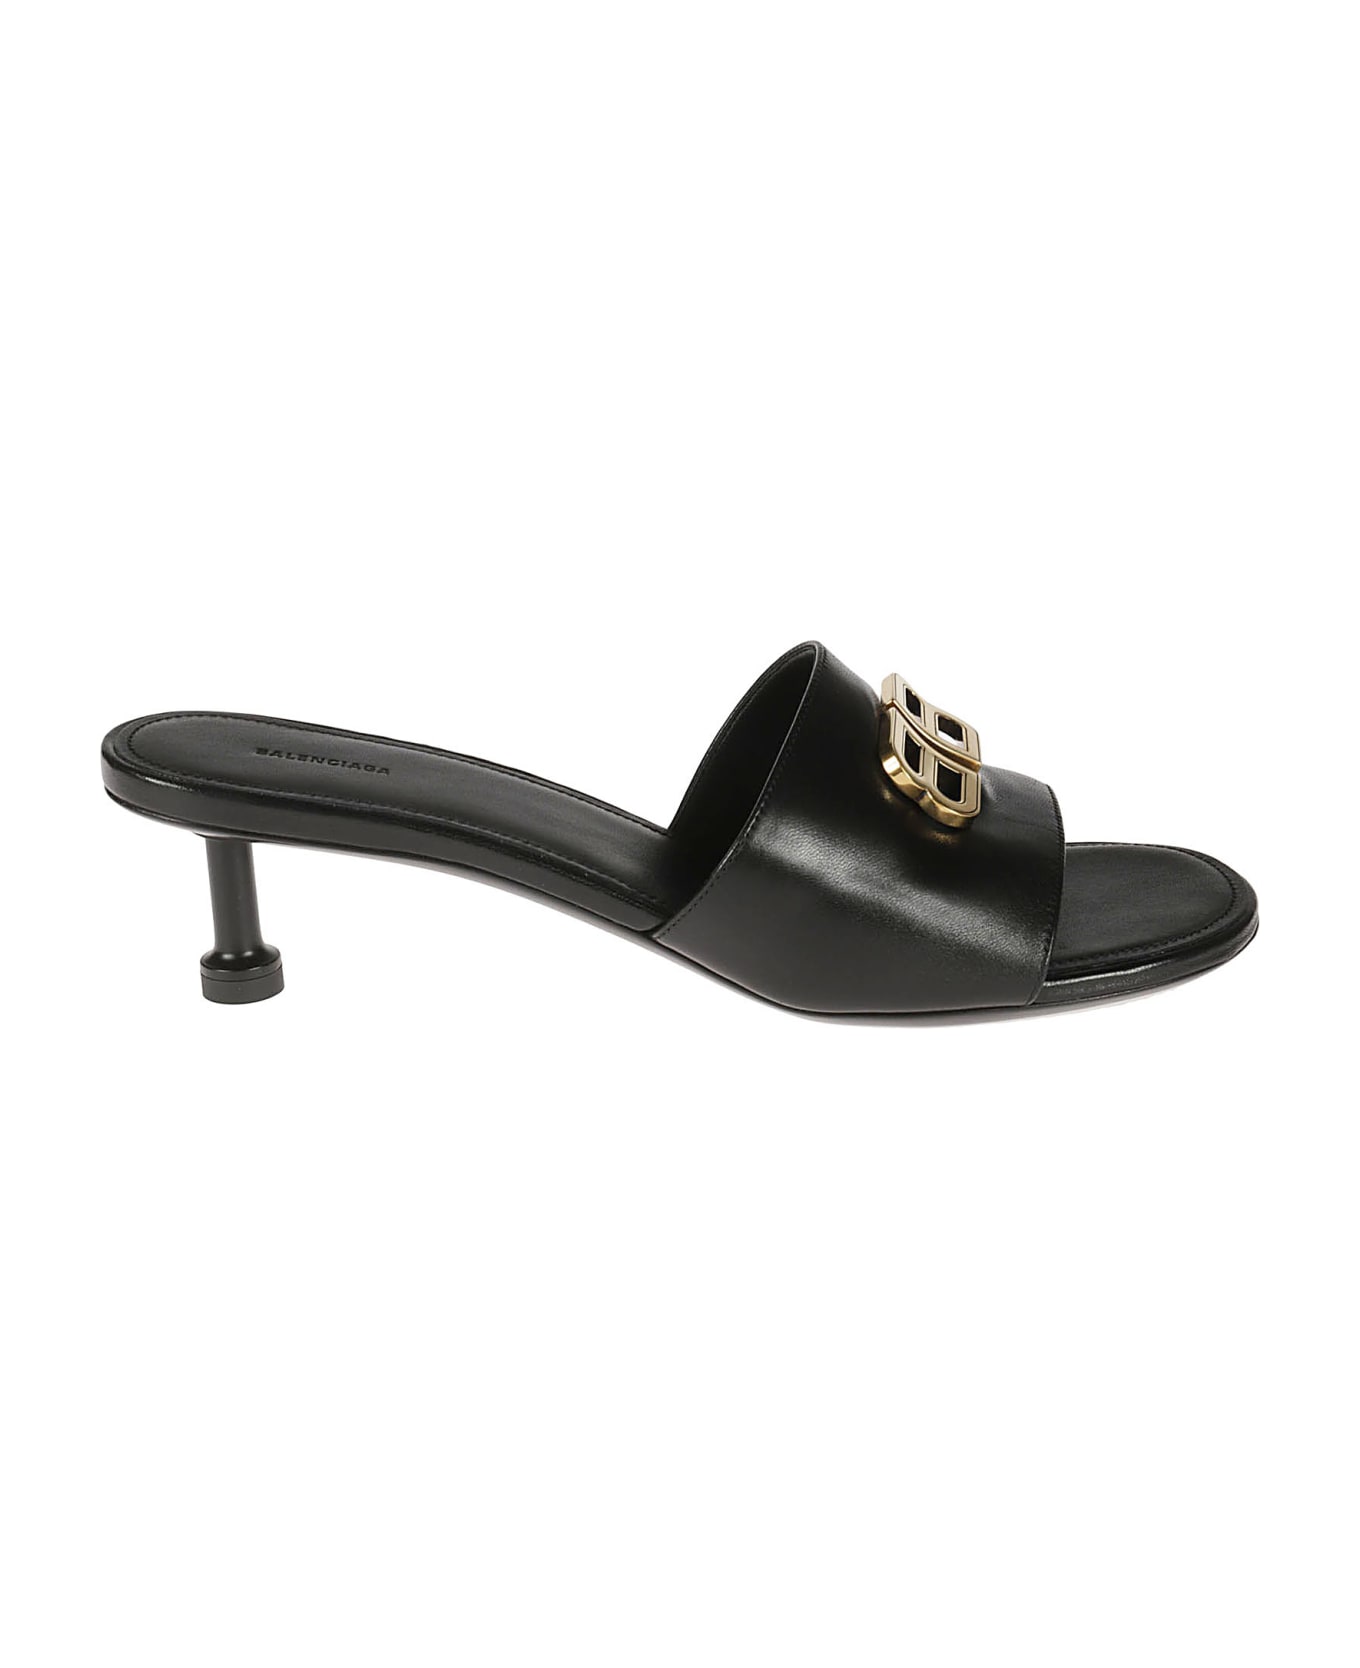 Balenciaga Groupie M50 Sandals - Black/Gold Vintage